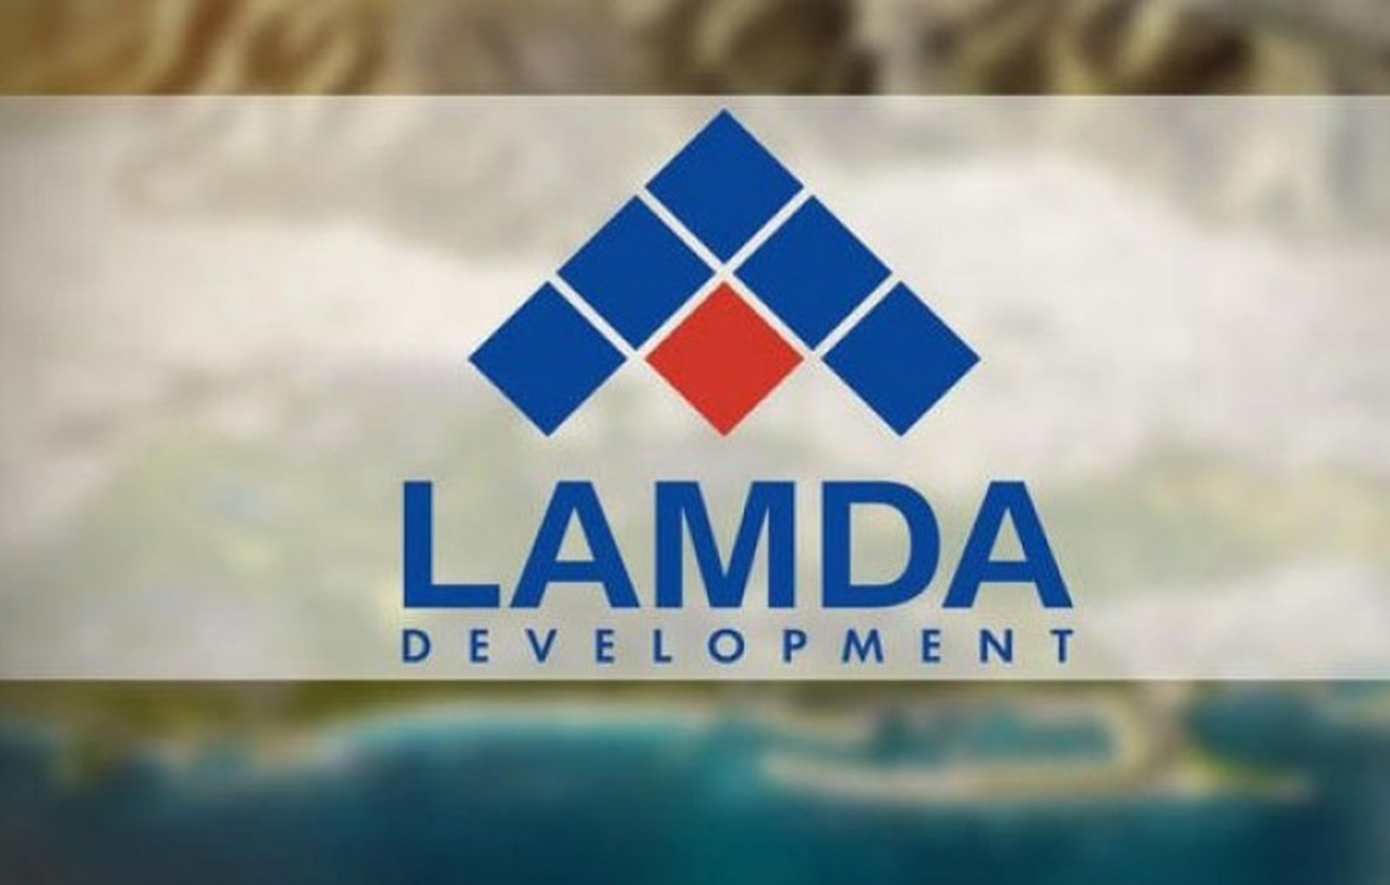 Lamda Development: Με δράσεις που αλλάζουν τον χαρακτήρα της αστικής ζωής γιορτάζει την Παγκόσμια Ημέρα Περιβάλλοντος